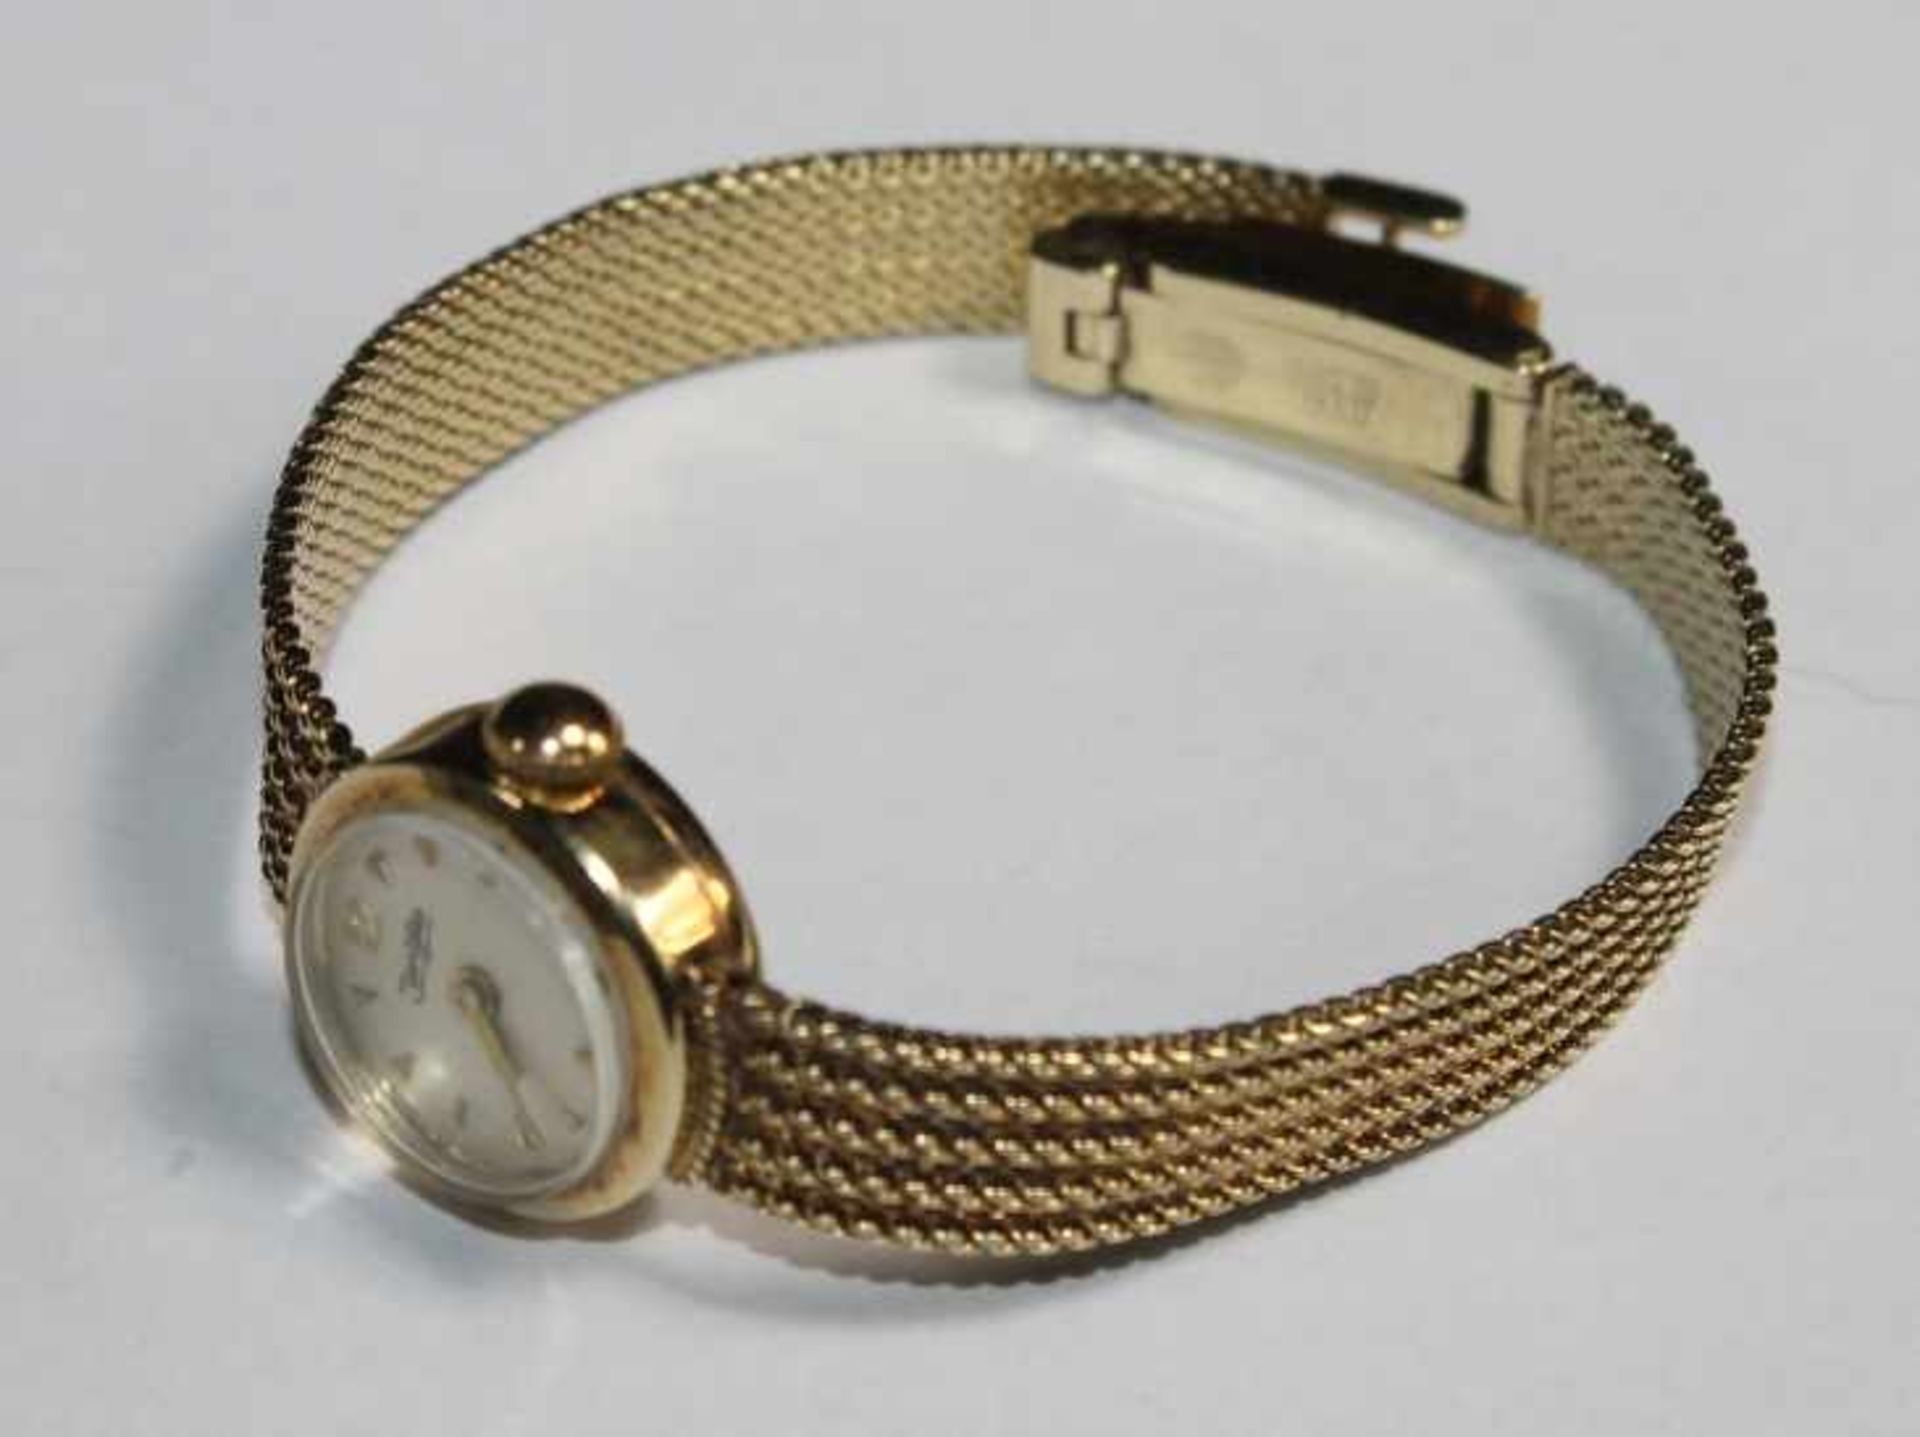 1 Damenarmbanduhr, Lünette und Armband 14kt.Gg (585/000) "ZentRa", L ca. 17cm, Funktion nicht - Image 2 of 2